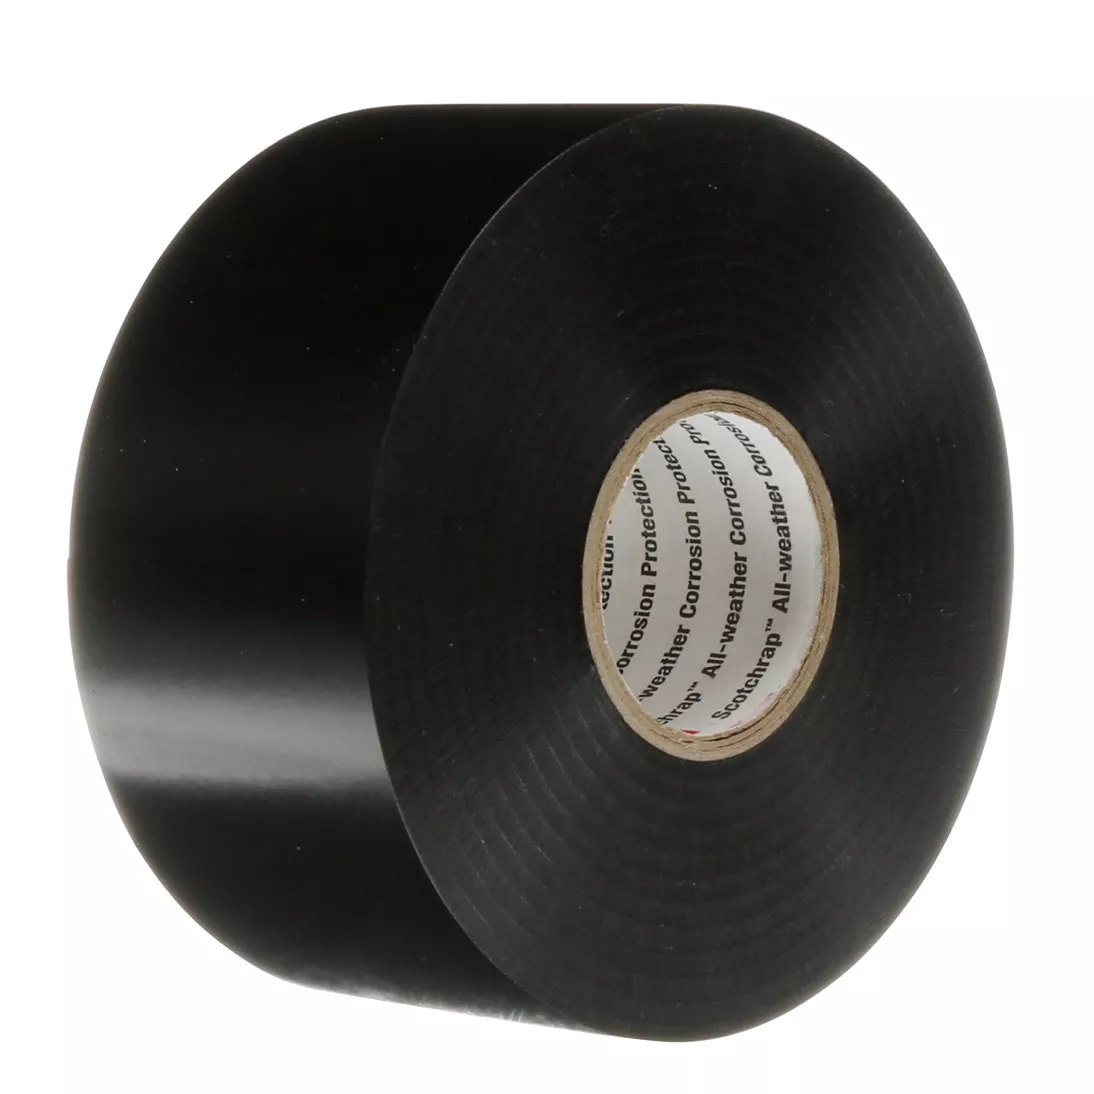 3M™ Scotchrap™ Vinyl Corrosion Protection Tape 50, 2 in x 100 ft,
Unprinted, Black, 24 rolls/Case